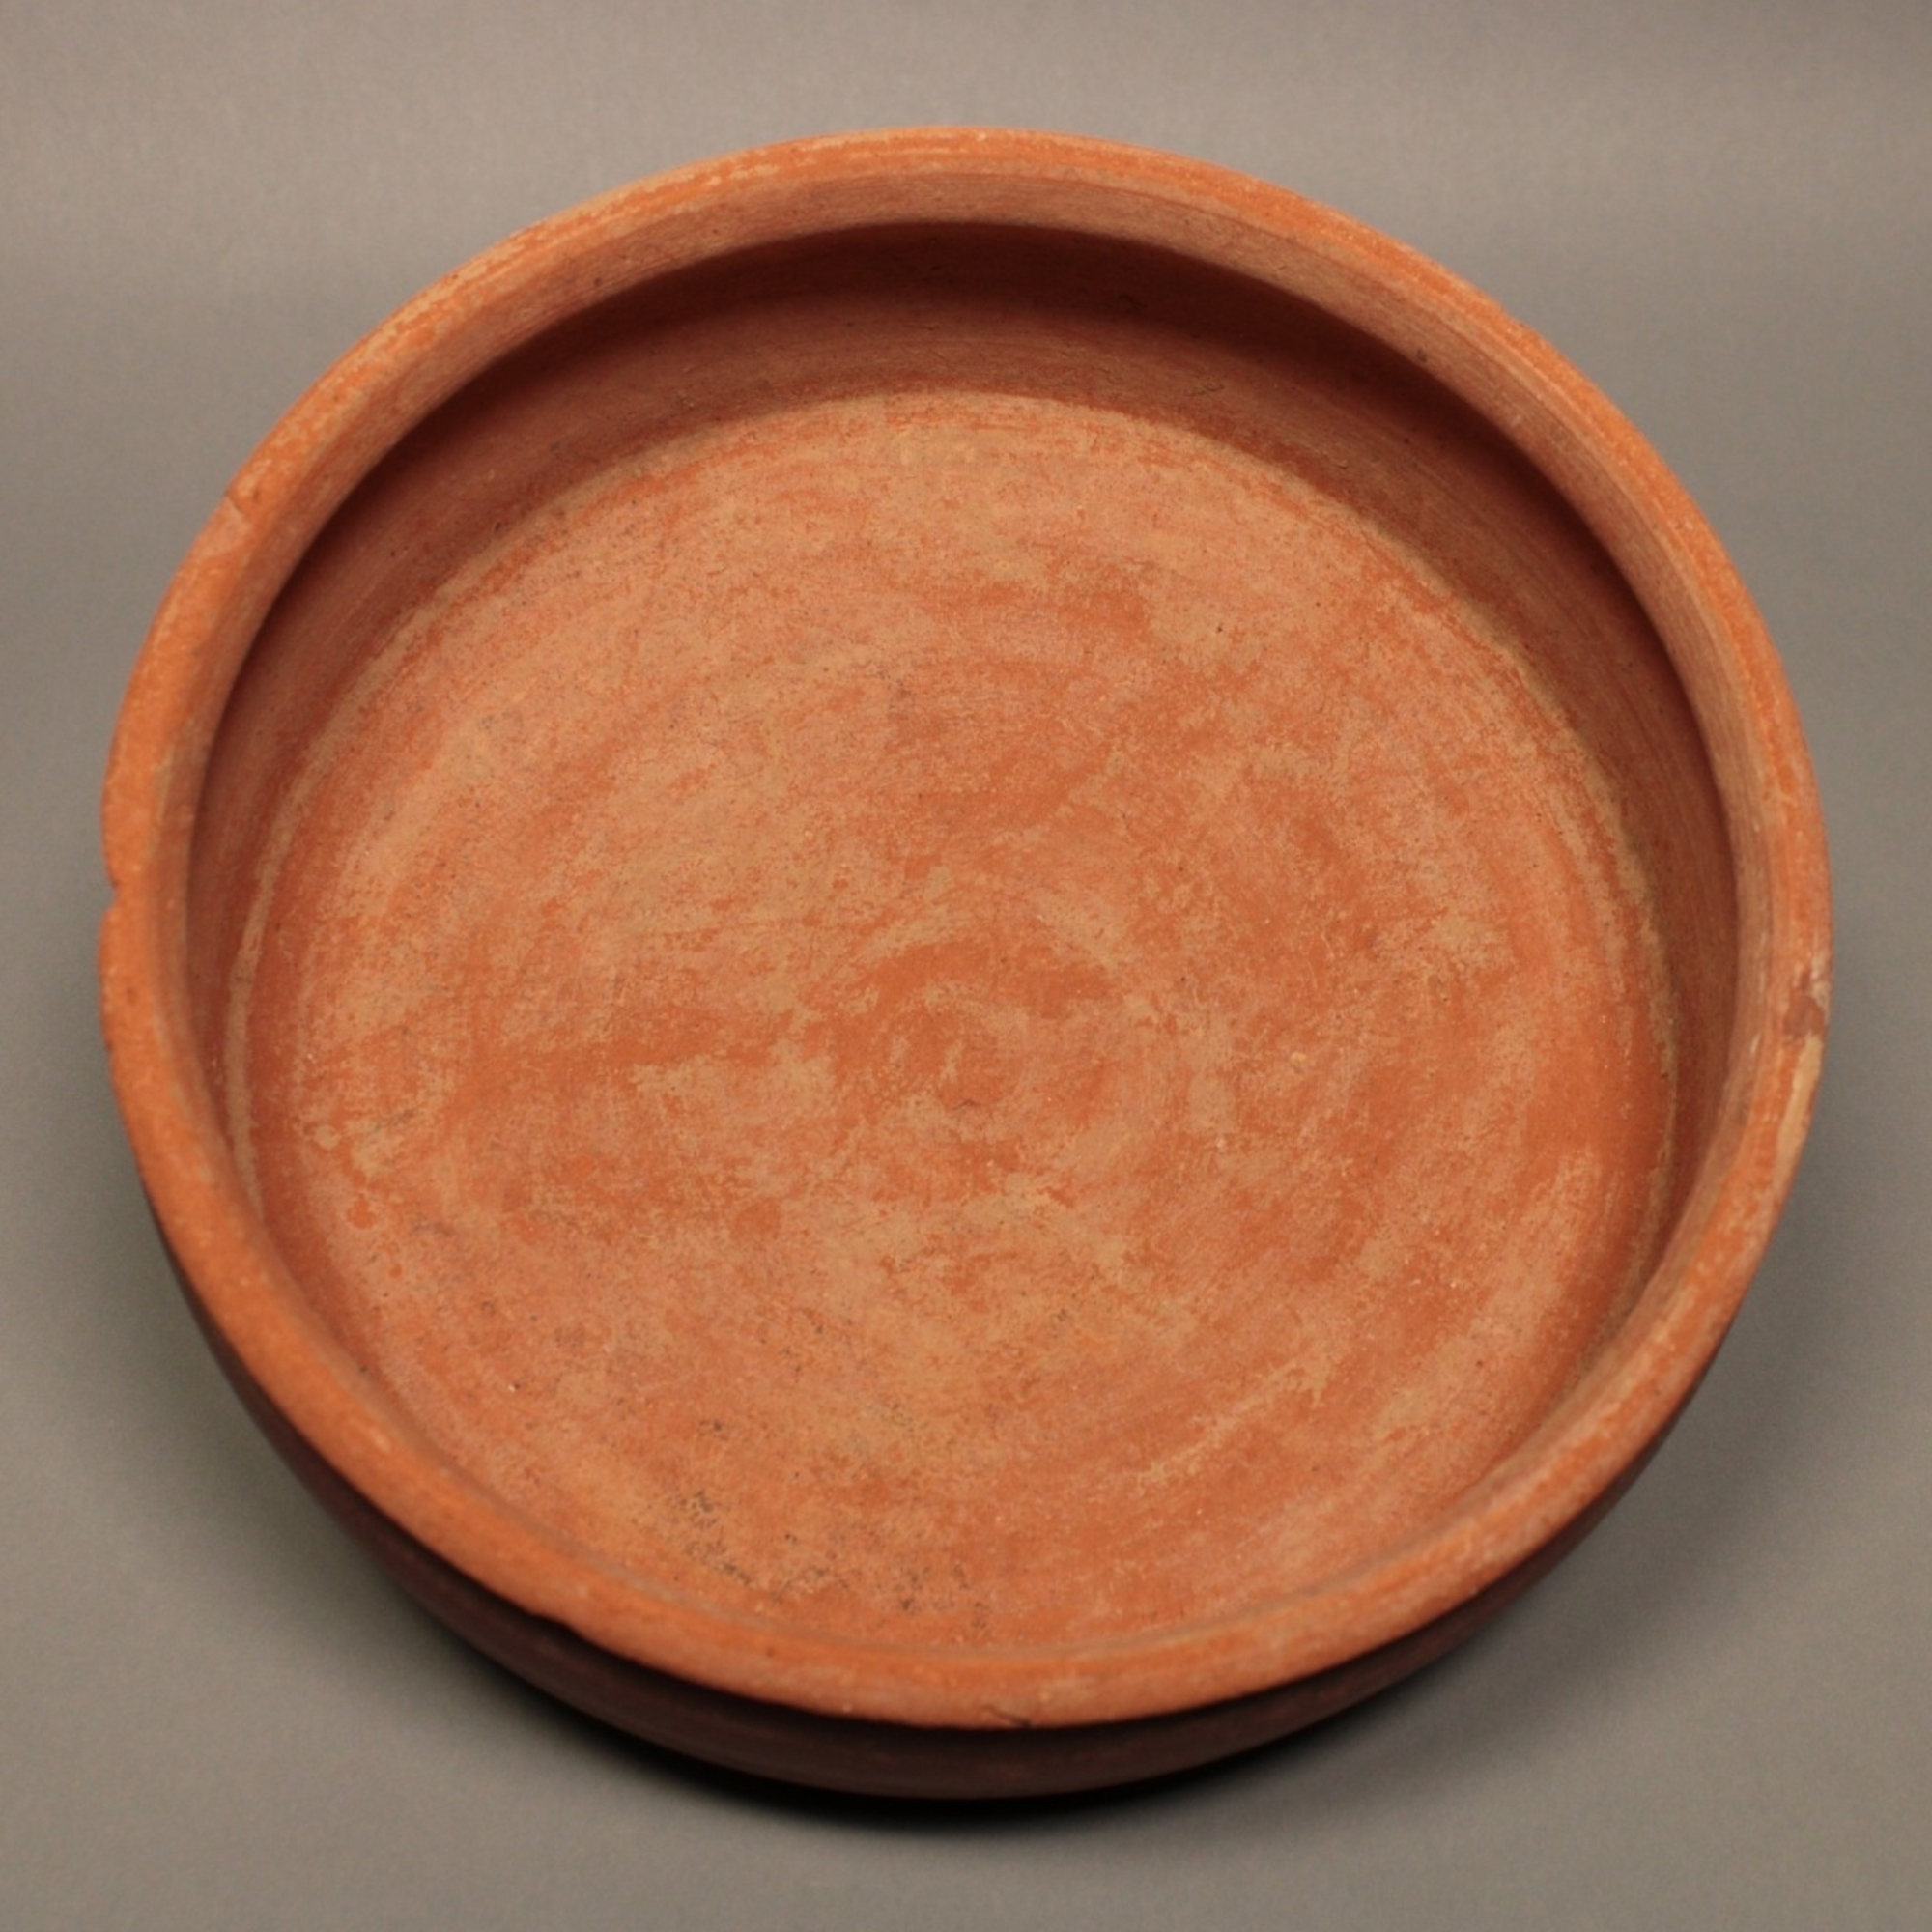 Roman Terracota Redware Bowl, 7.8 inch - c. 1 to 400 CE - Roman Empire - 10/10/23 Auction